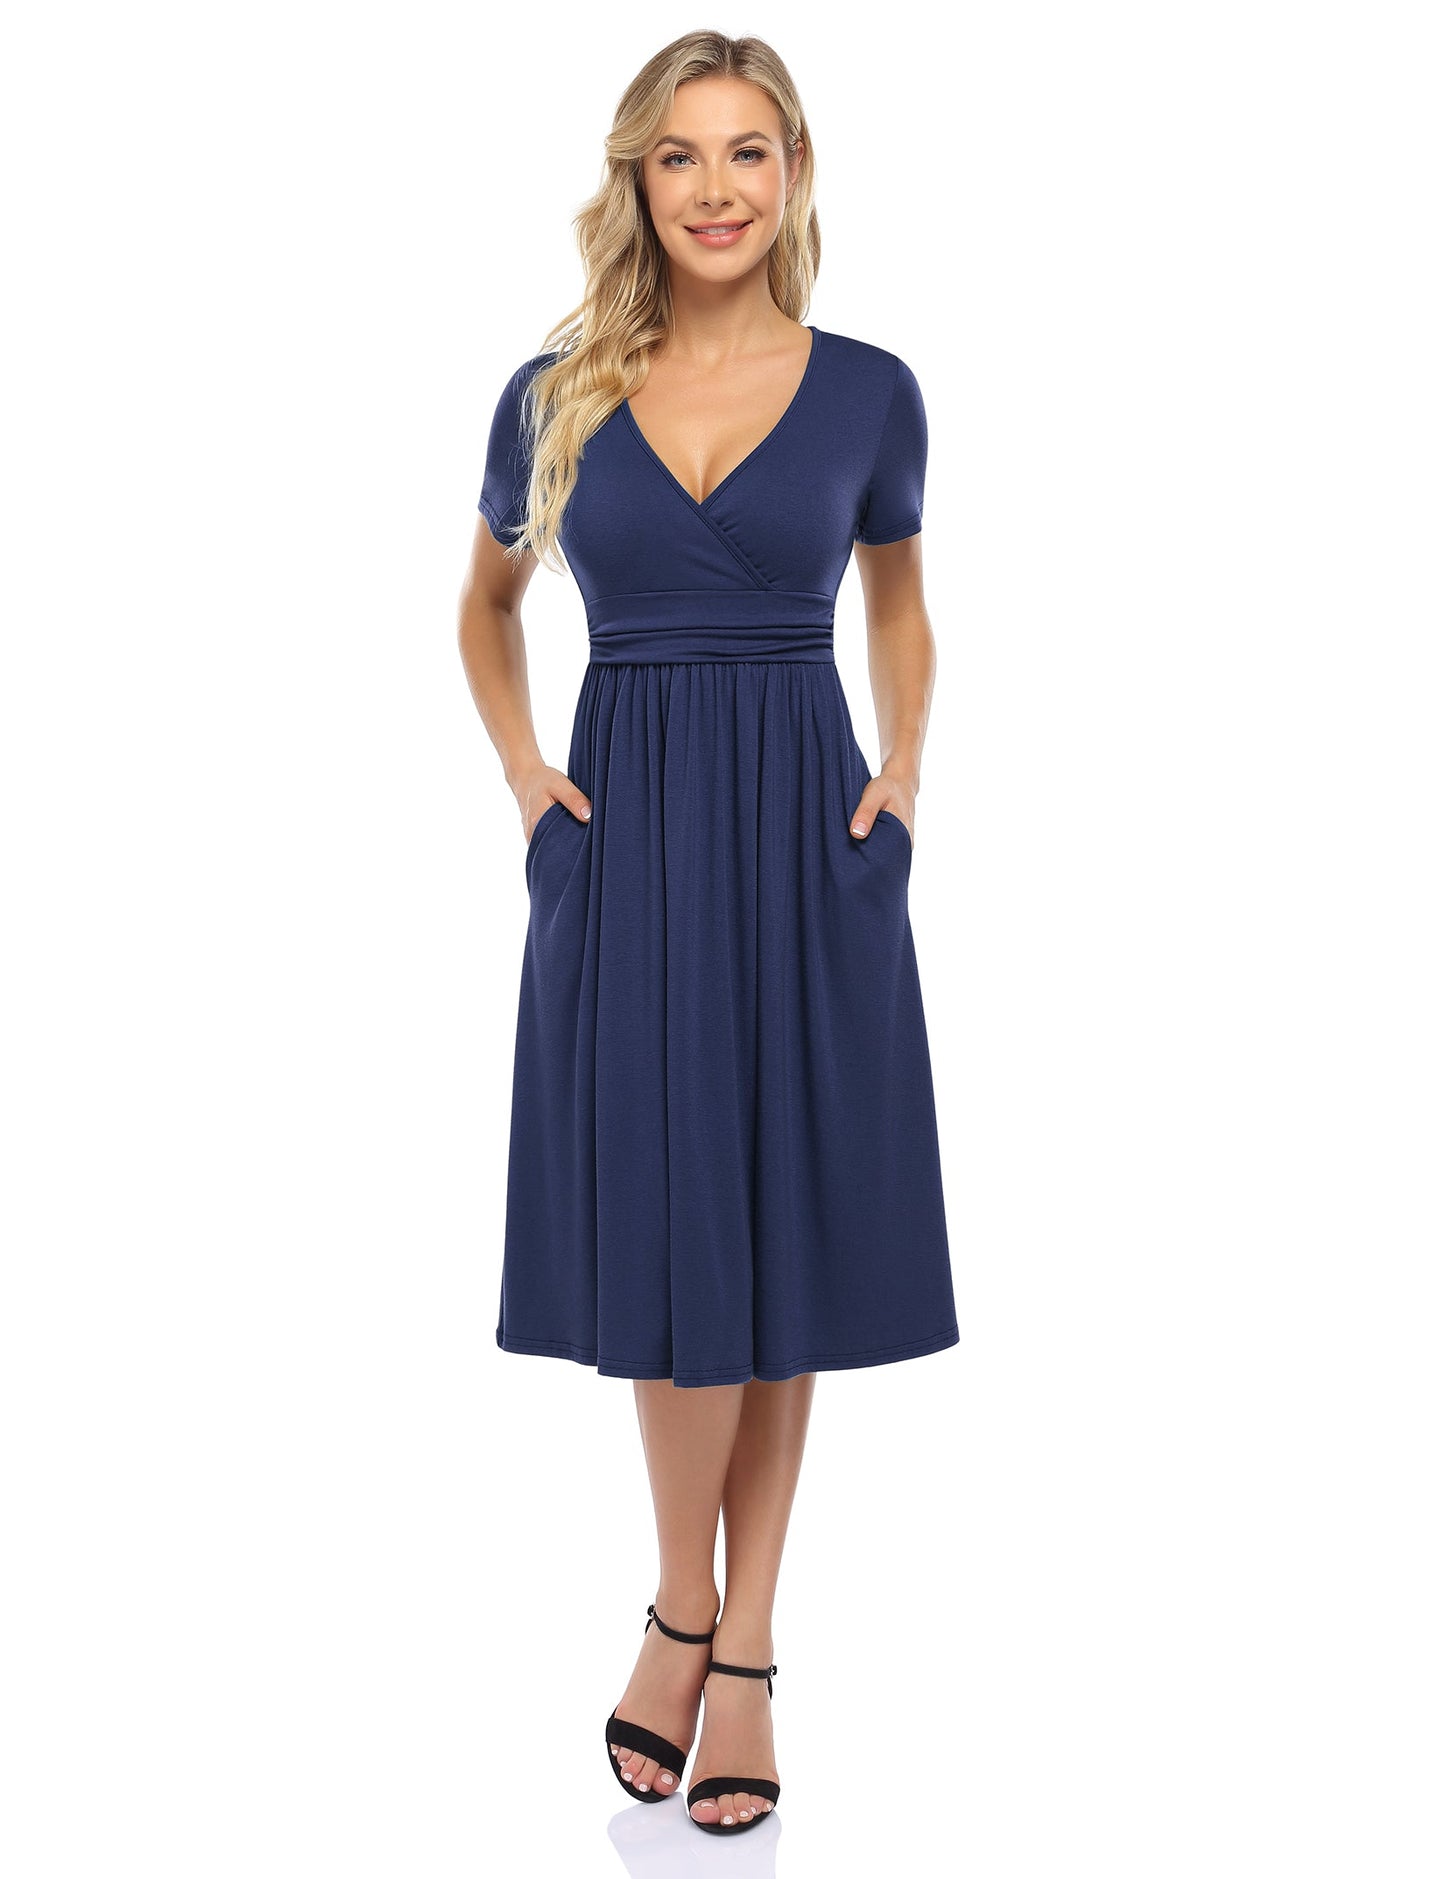 YESFASHION Women's V-neck Casual Dress Blue